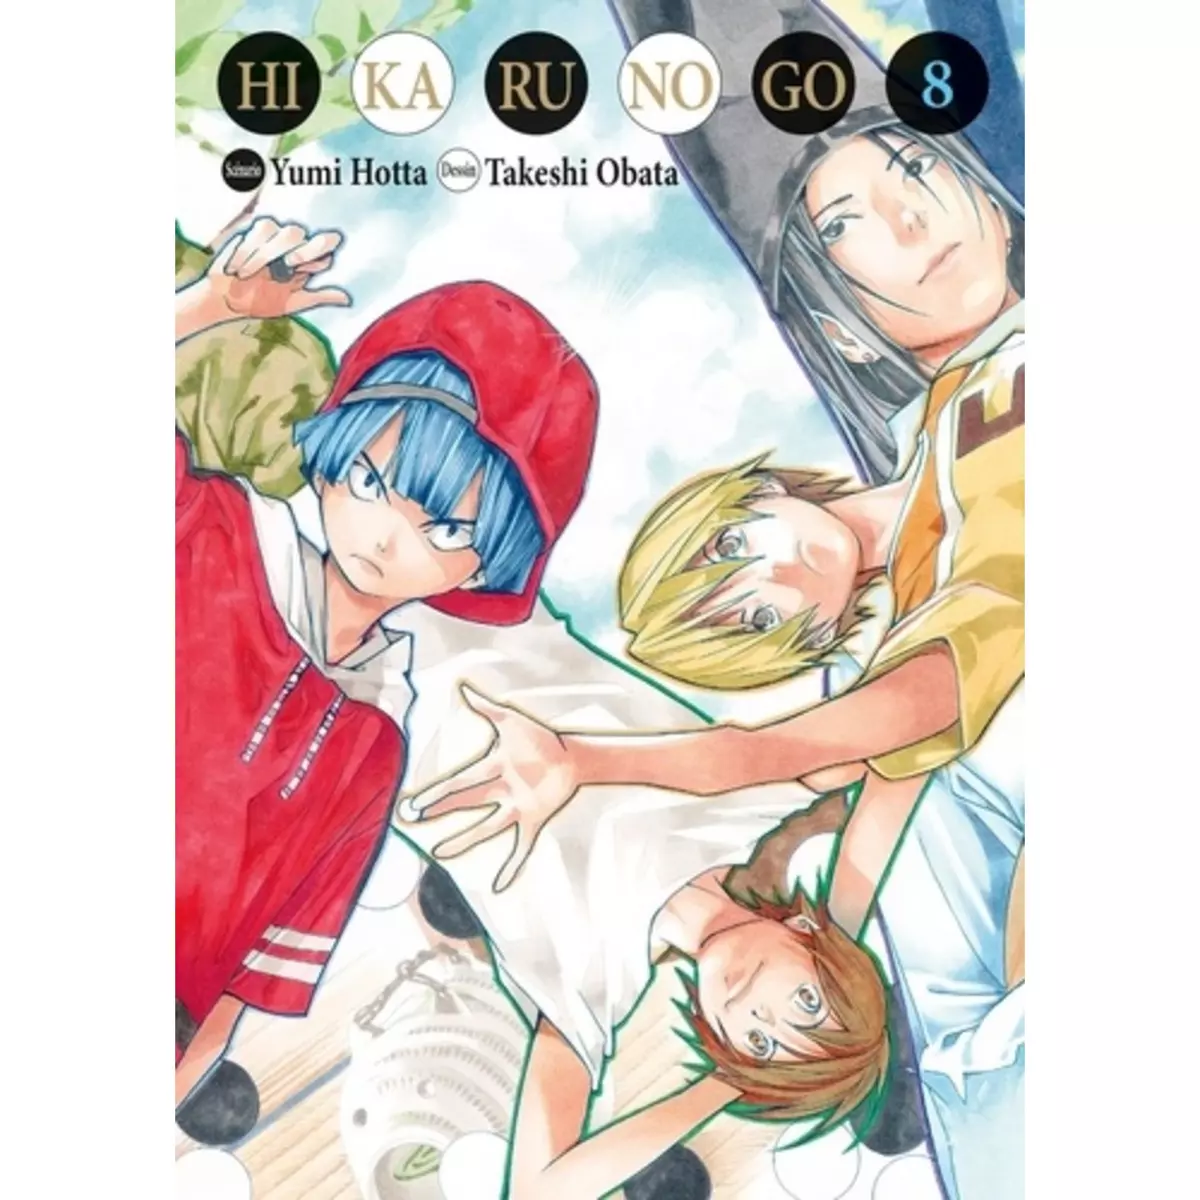  HIKARU NO GO TOME 8 . EDITION DE LUXE, Hotta Yumi